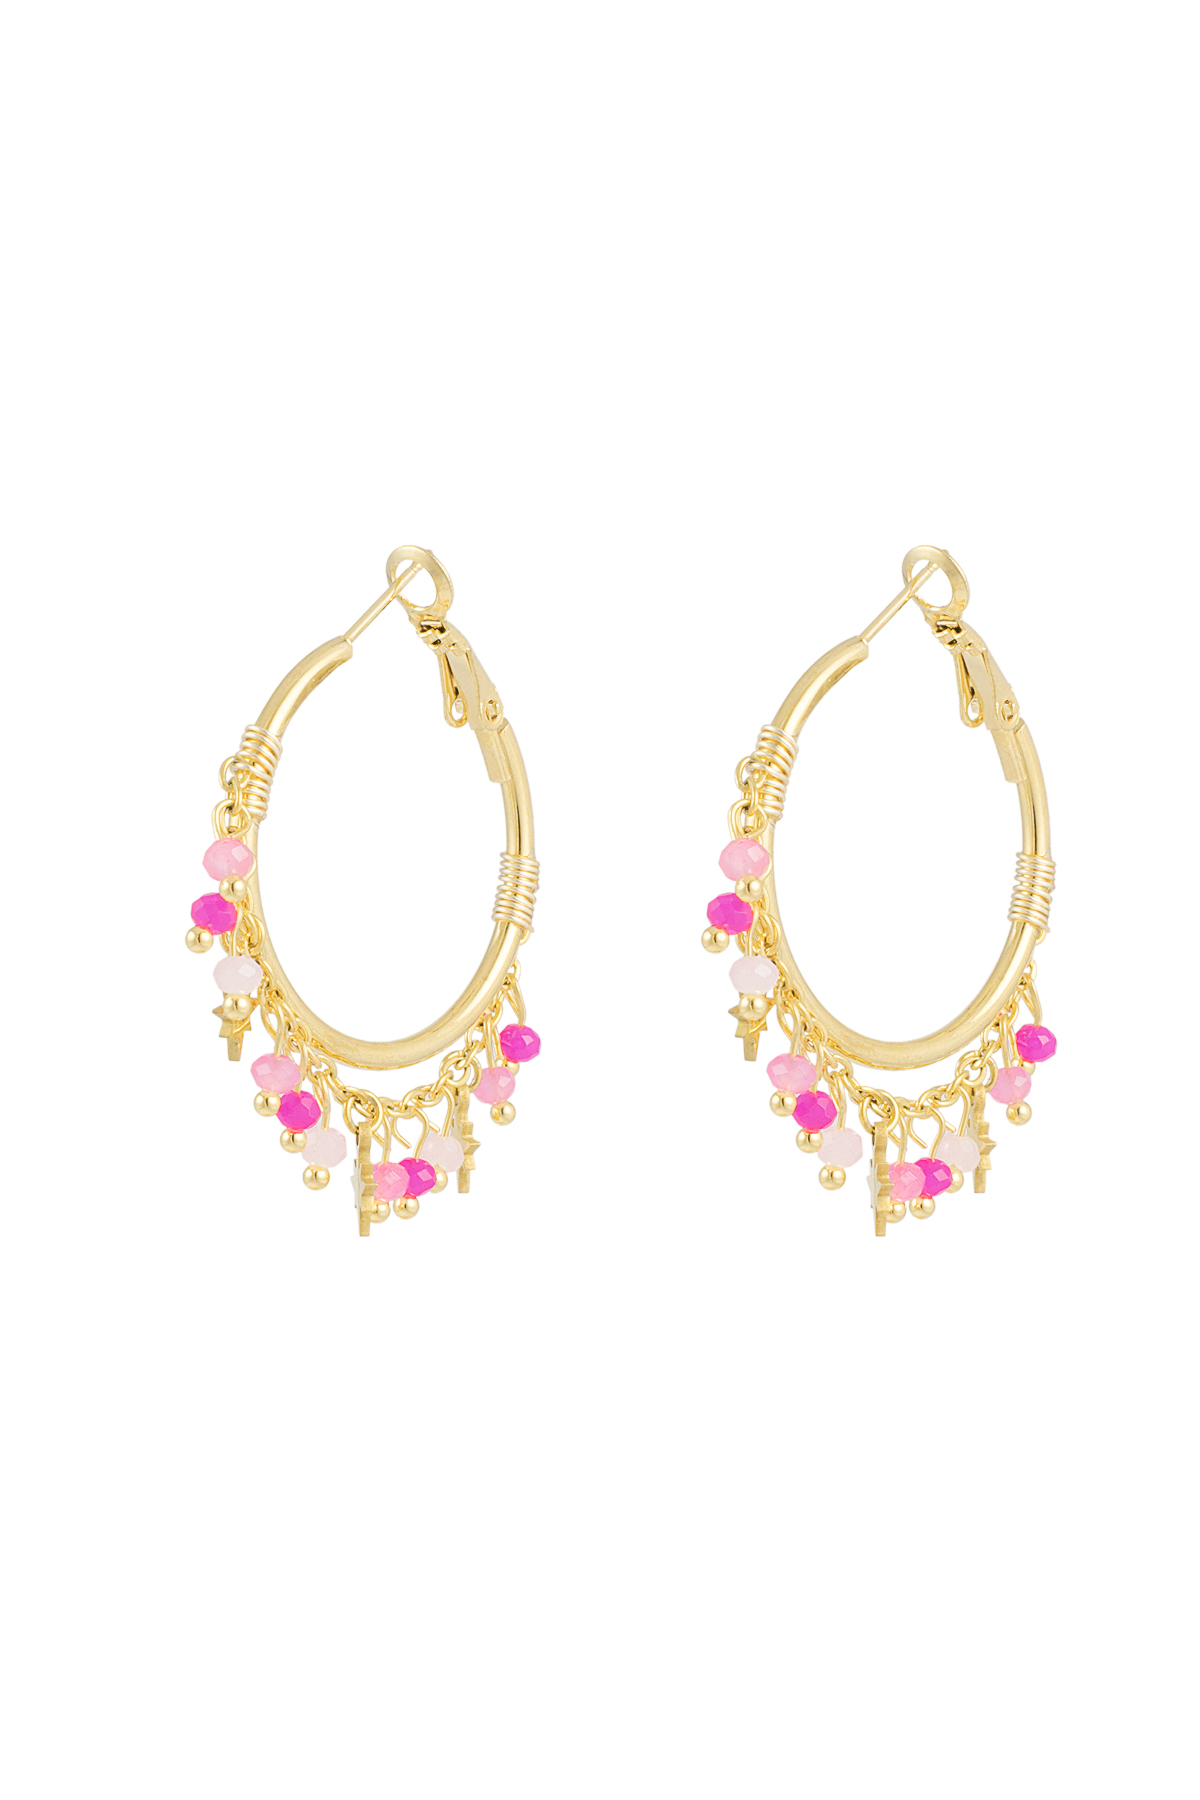 Earrings flawless filter - pink h5 